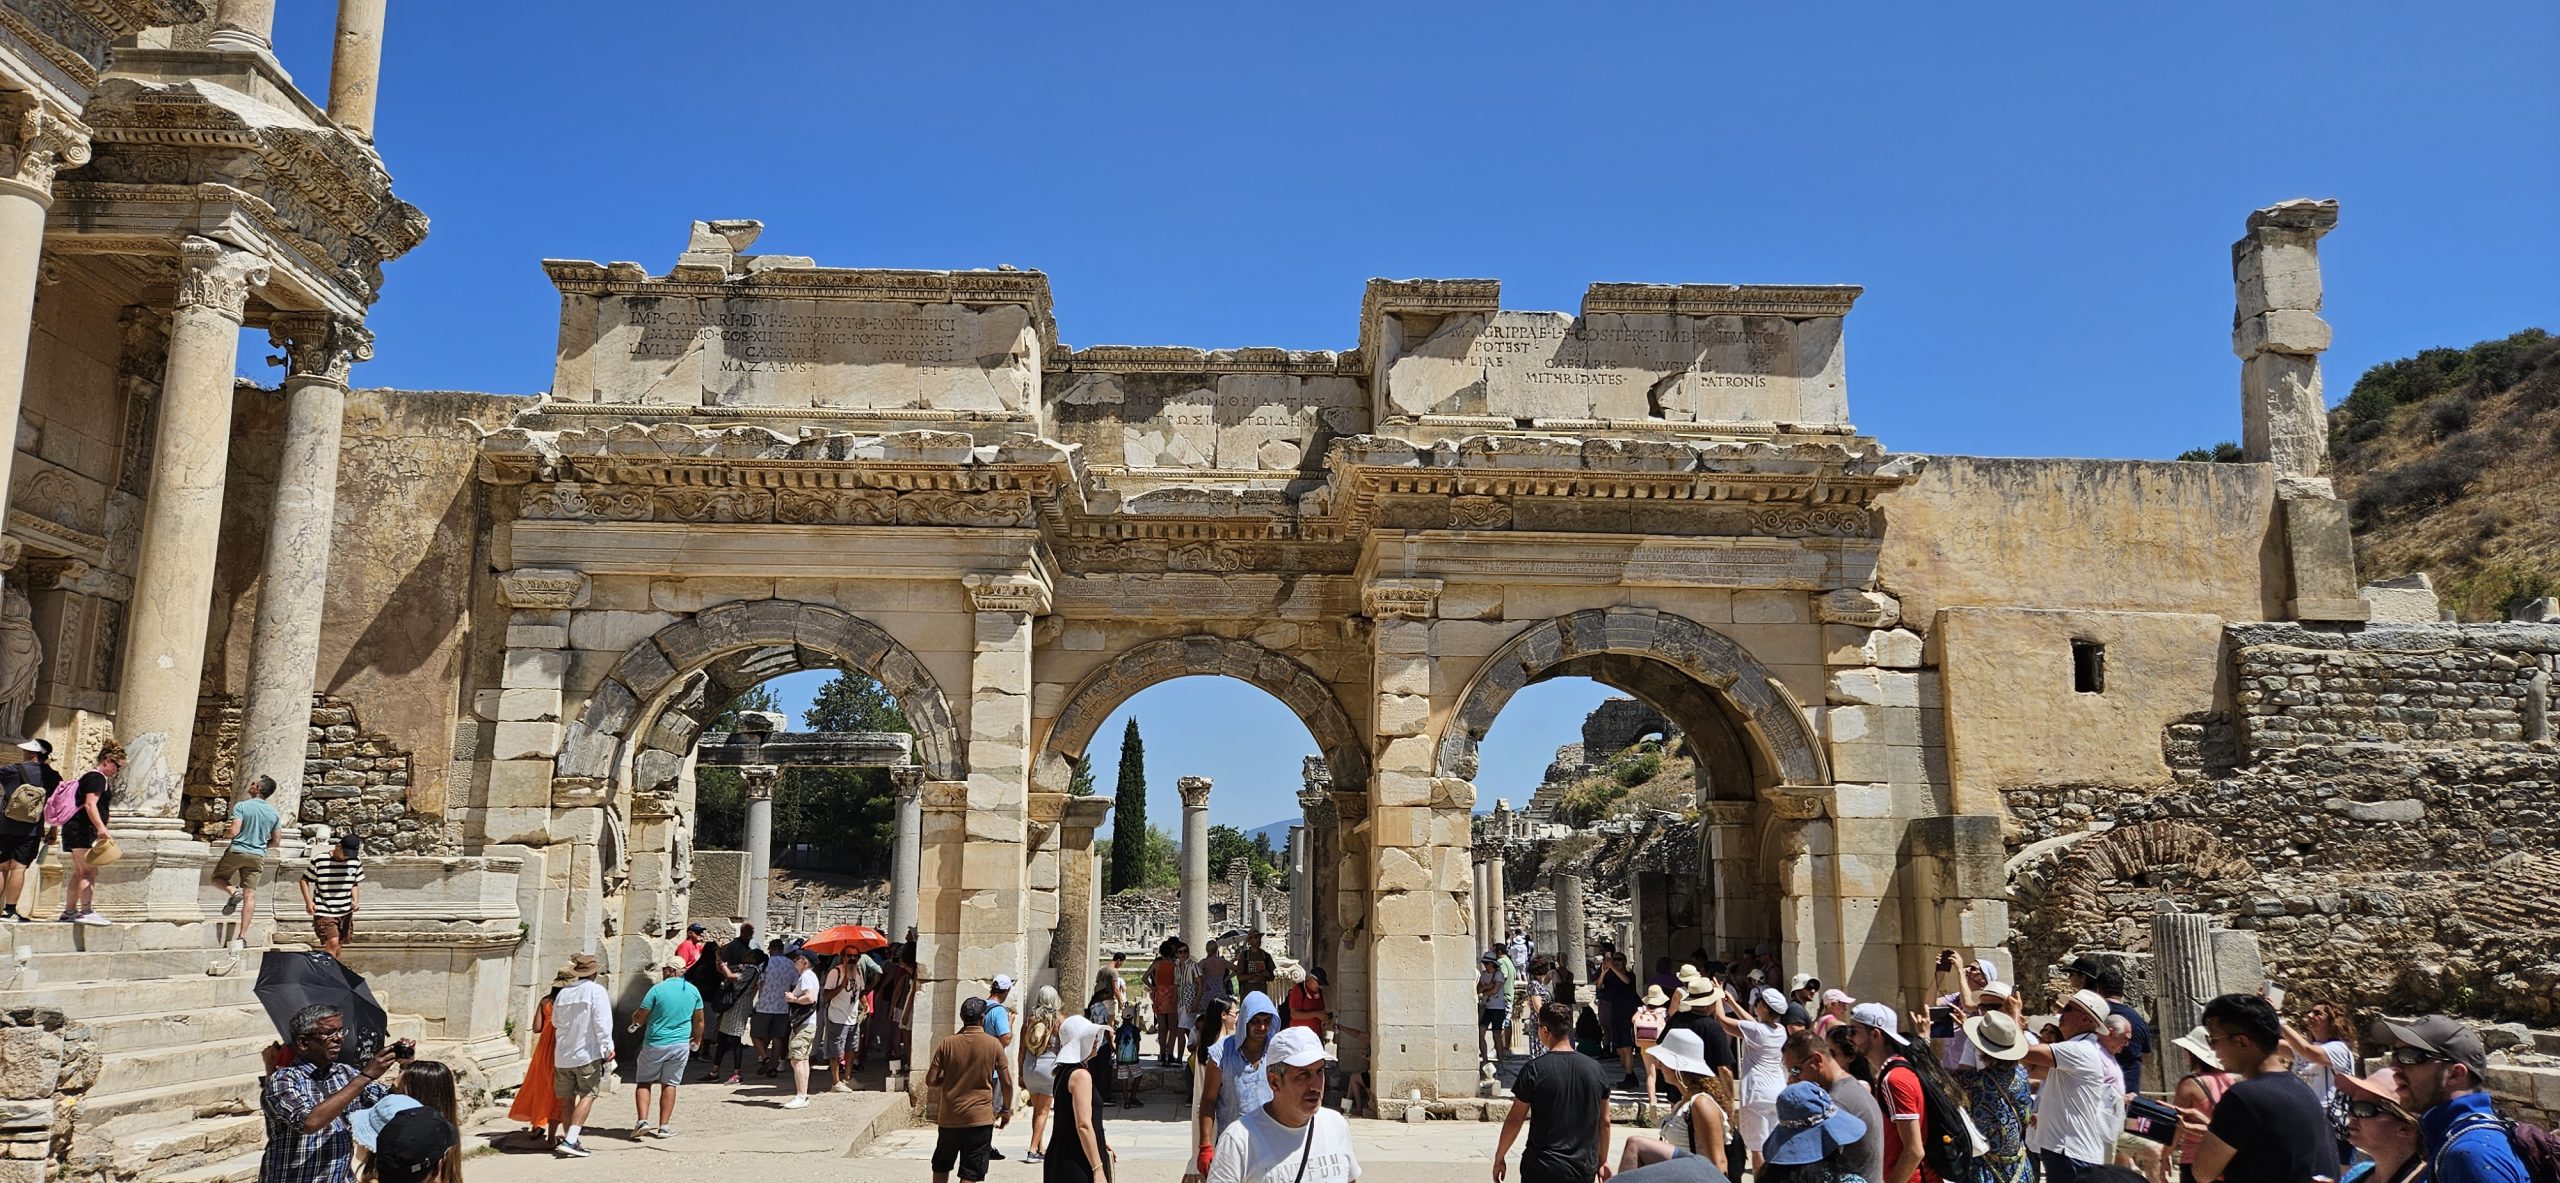 The Gate of Mazeus and Mithridates in Ephesus